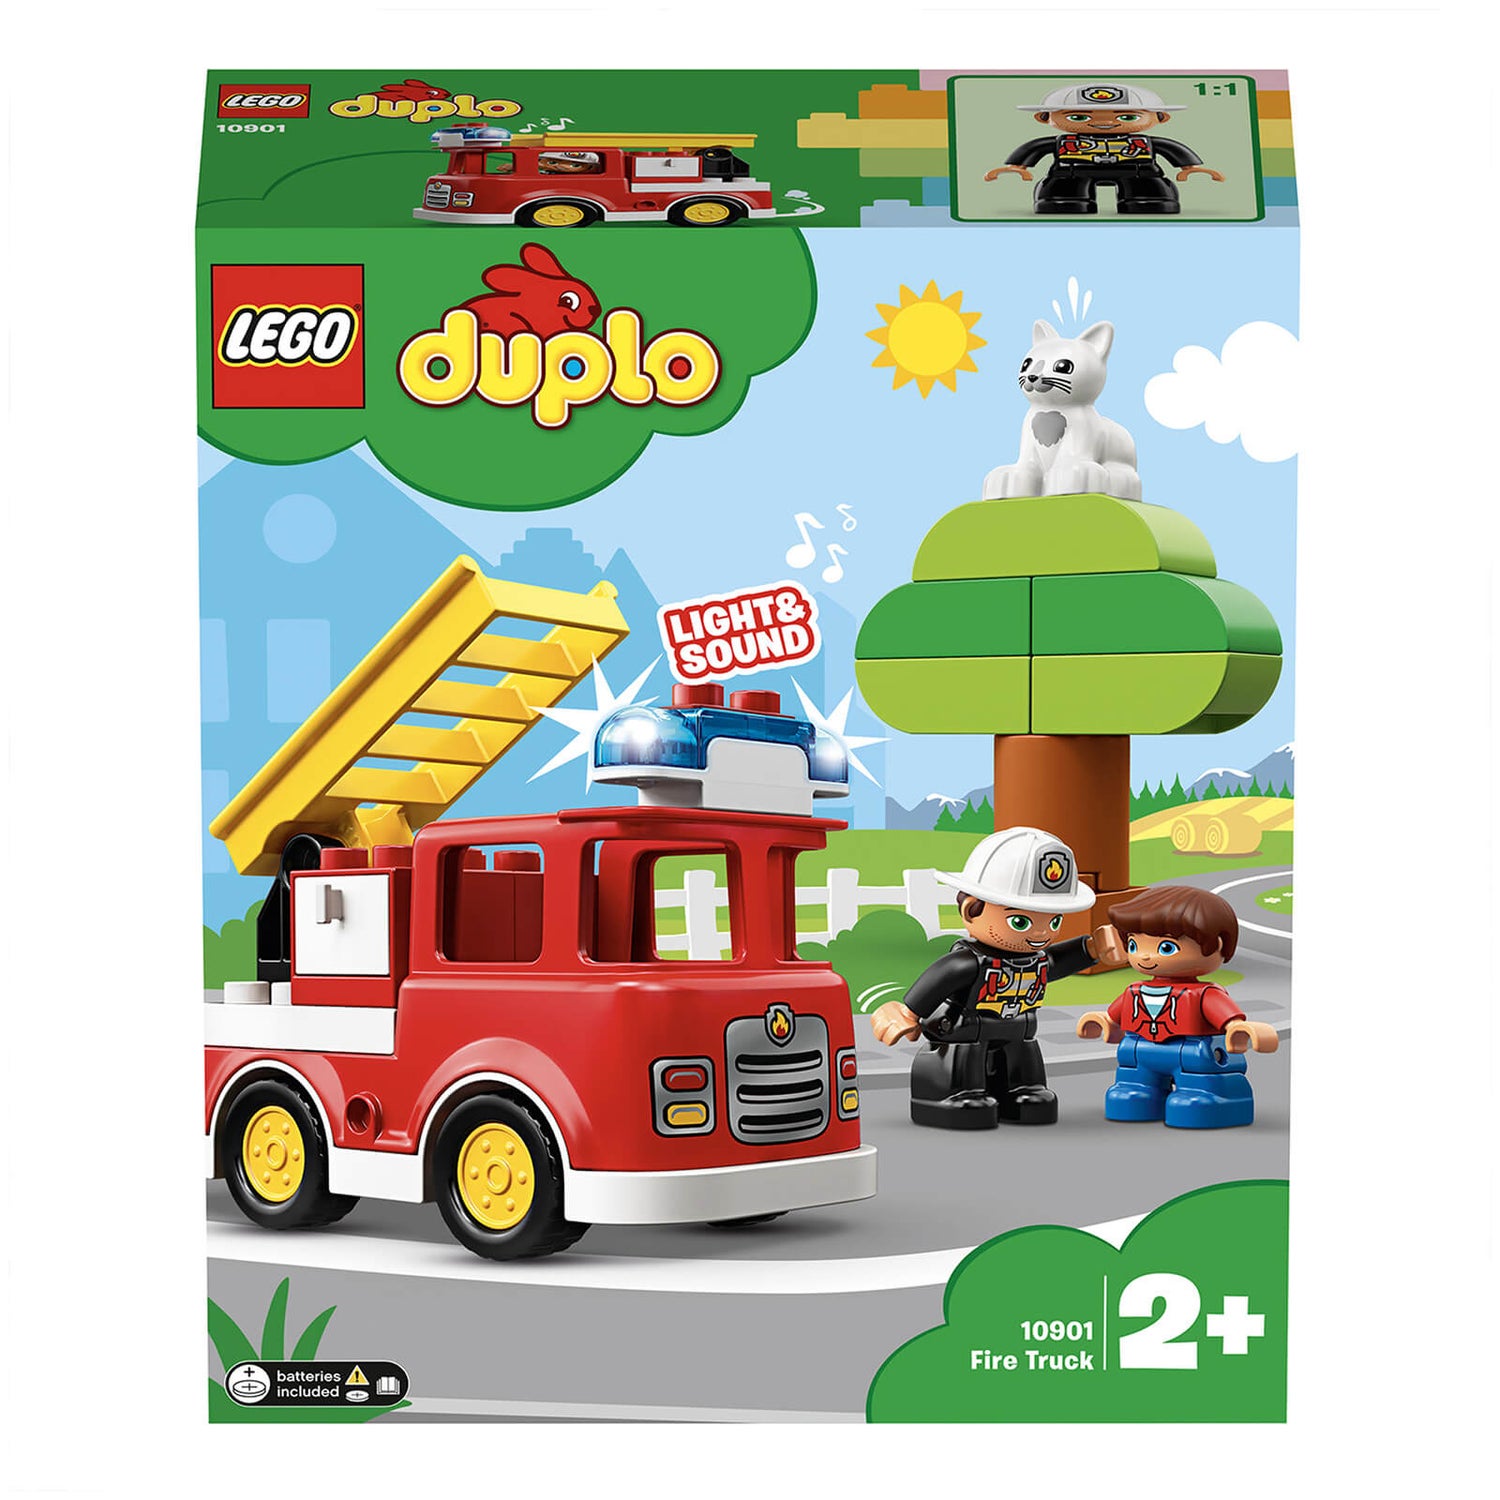 LEGO DUPLO Town: Fire Truck Building Set (10901)